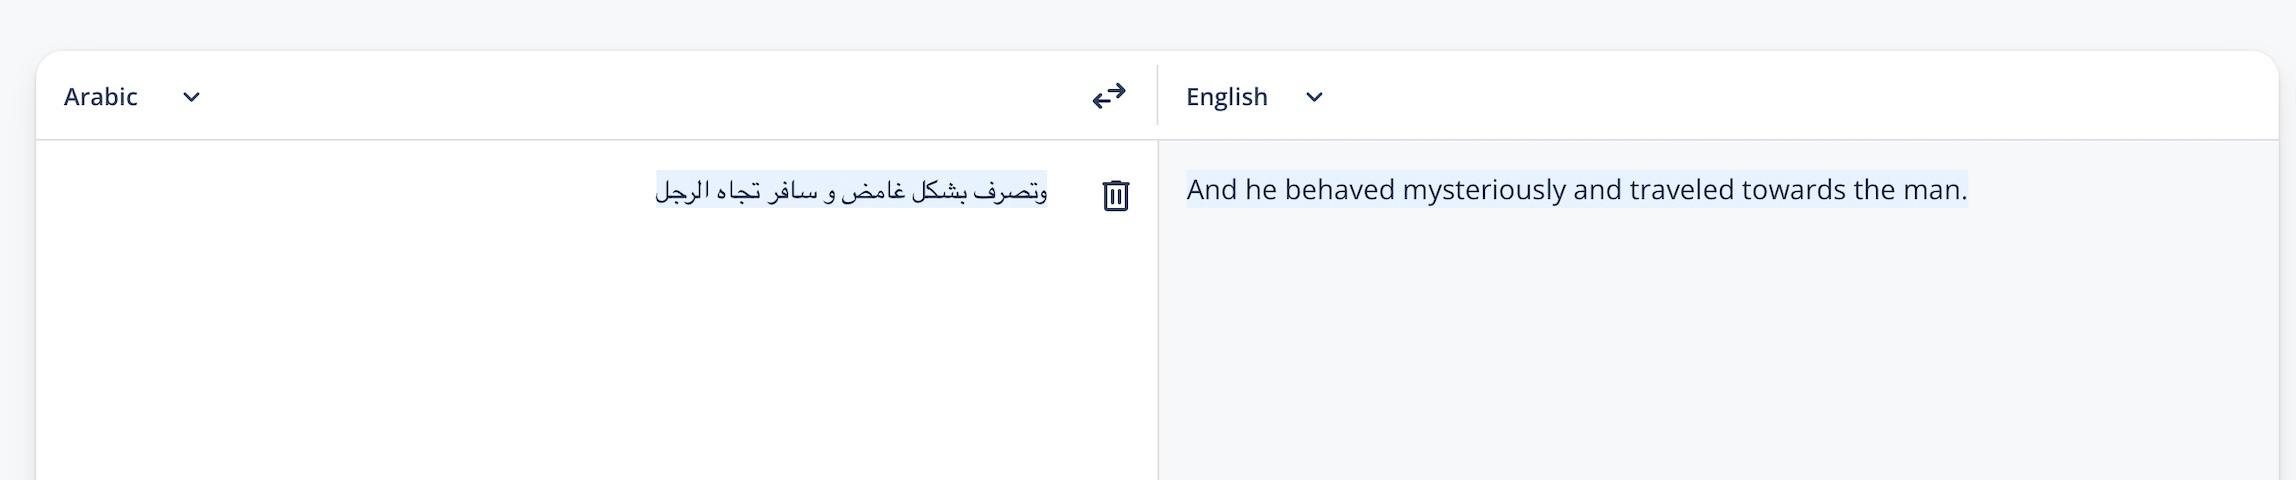 AI and Arabic translationjpg